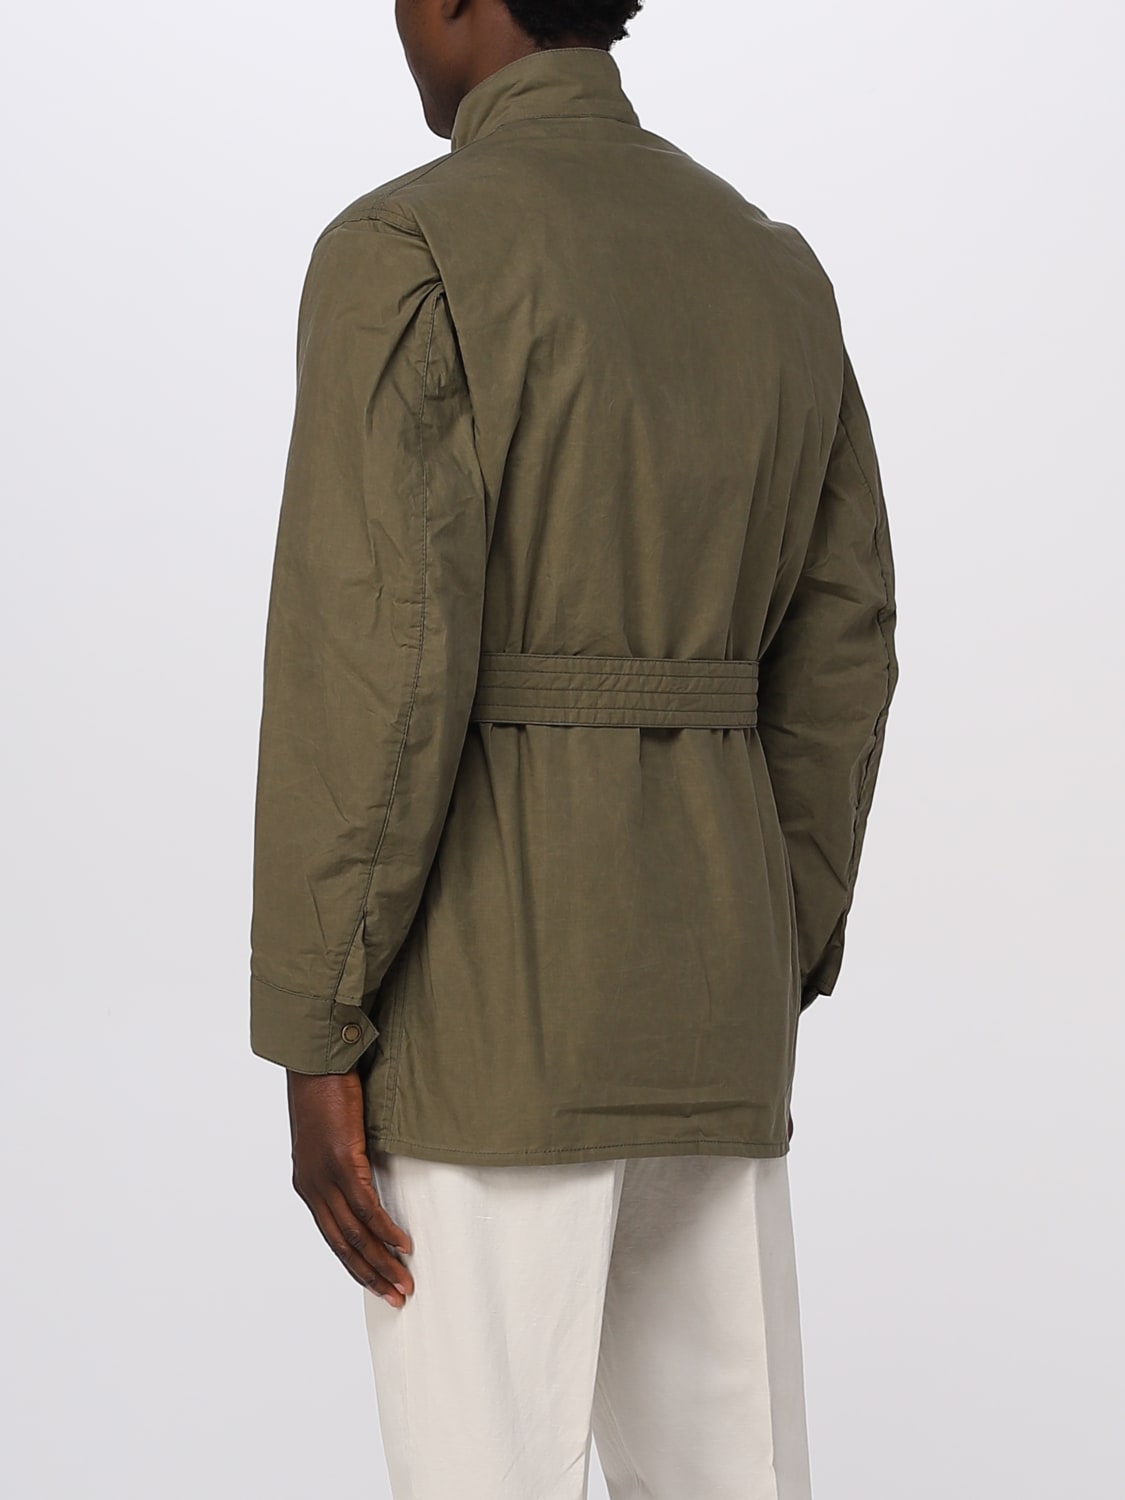 BARBOUR: jacket for man - Military | Barbour jacket MCA0909 online on ...